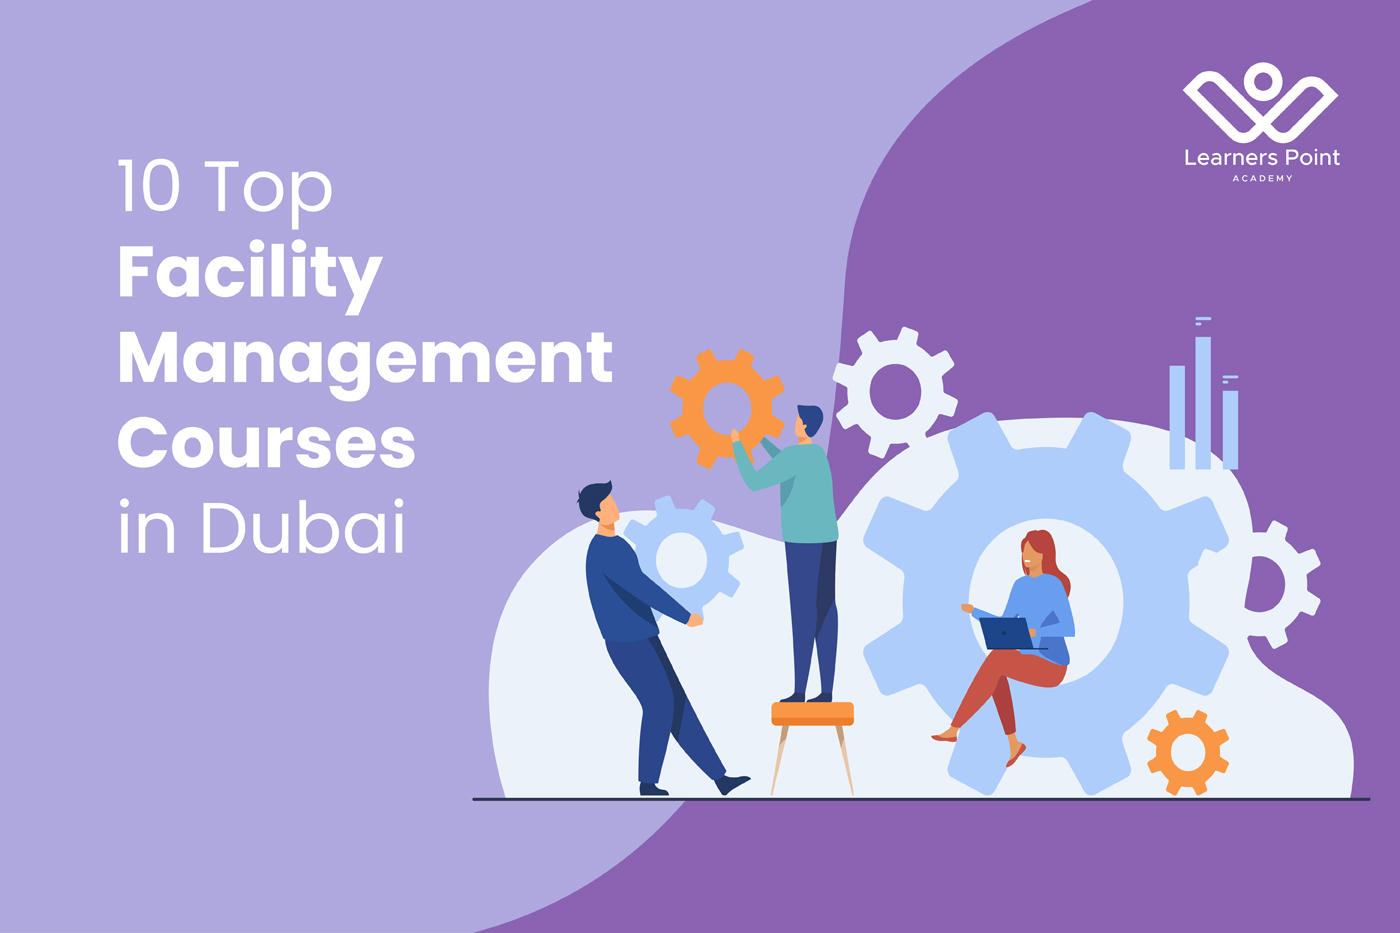 10 Top Facility Management Courses in Dubai